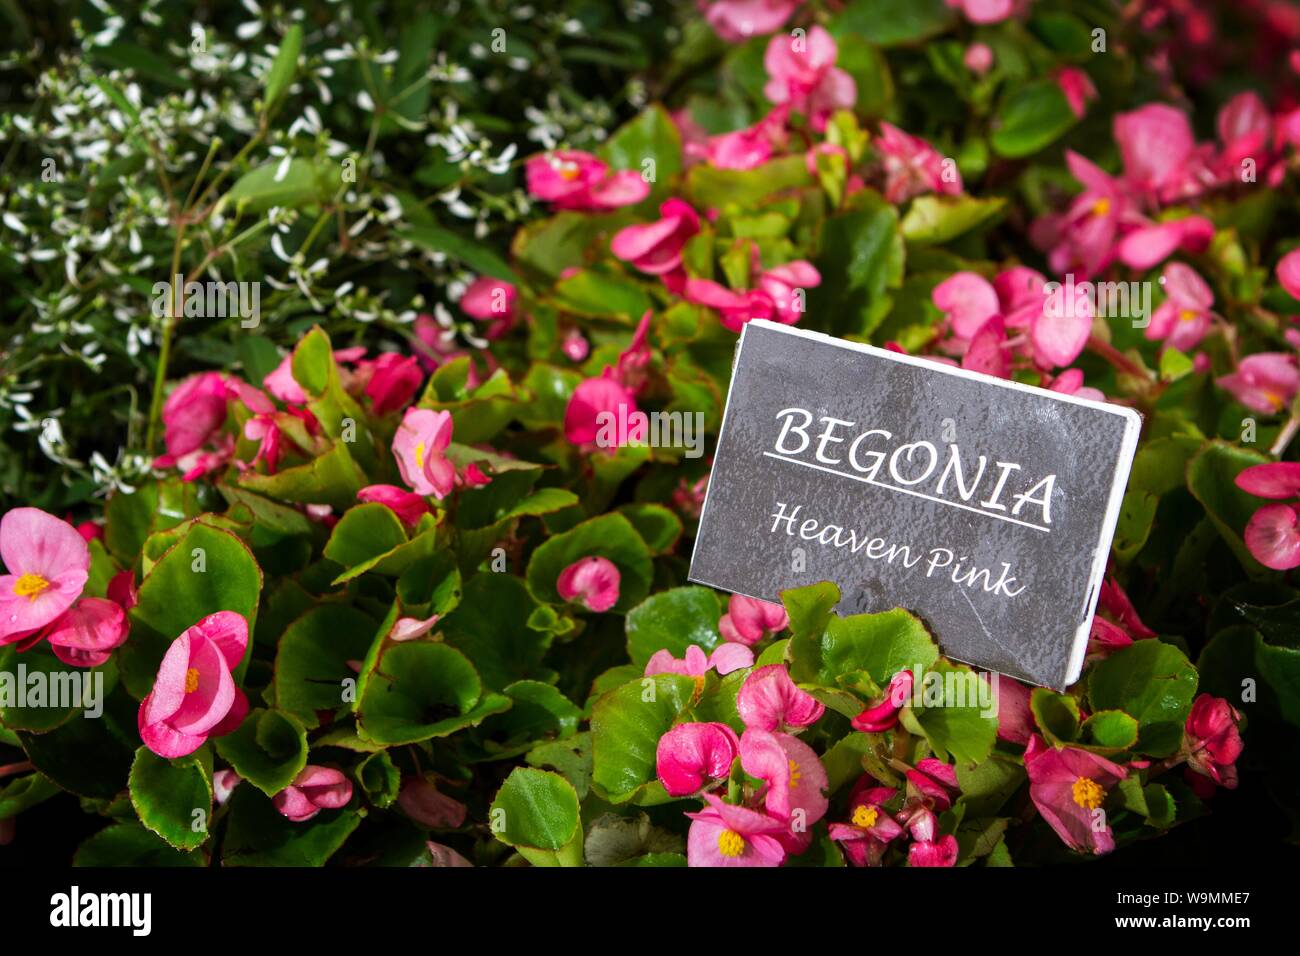 a begonia nonstop pink garden gardening plant plants gardens Stock Photo